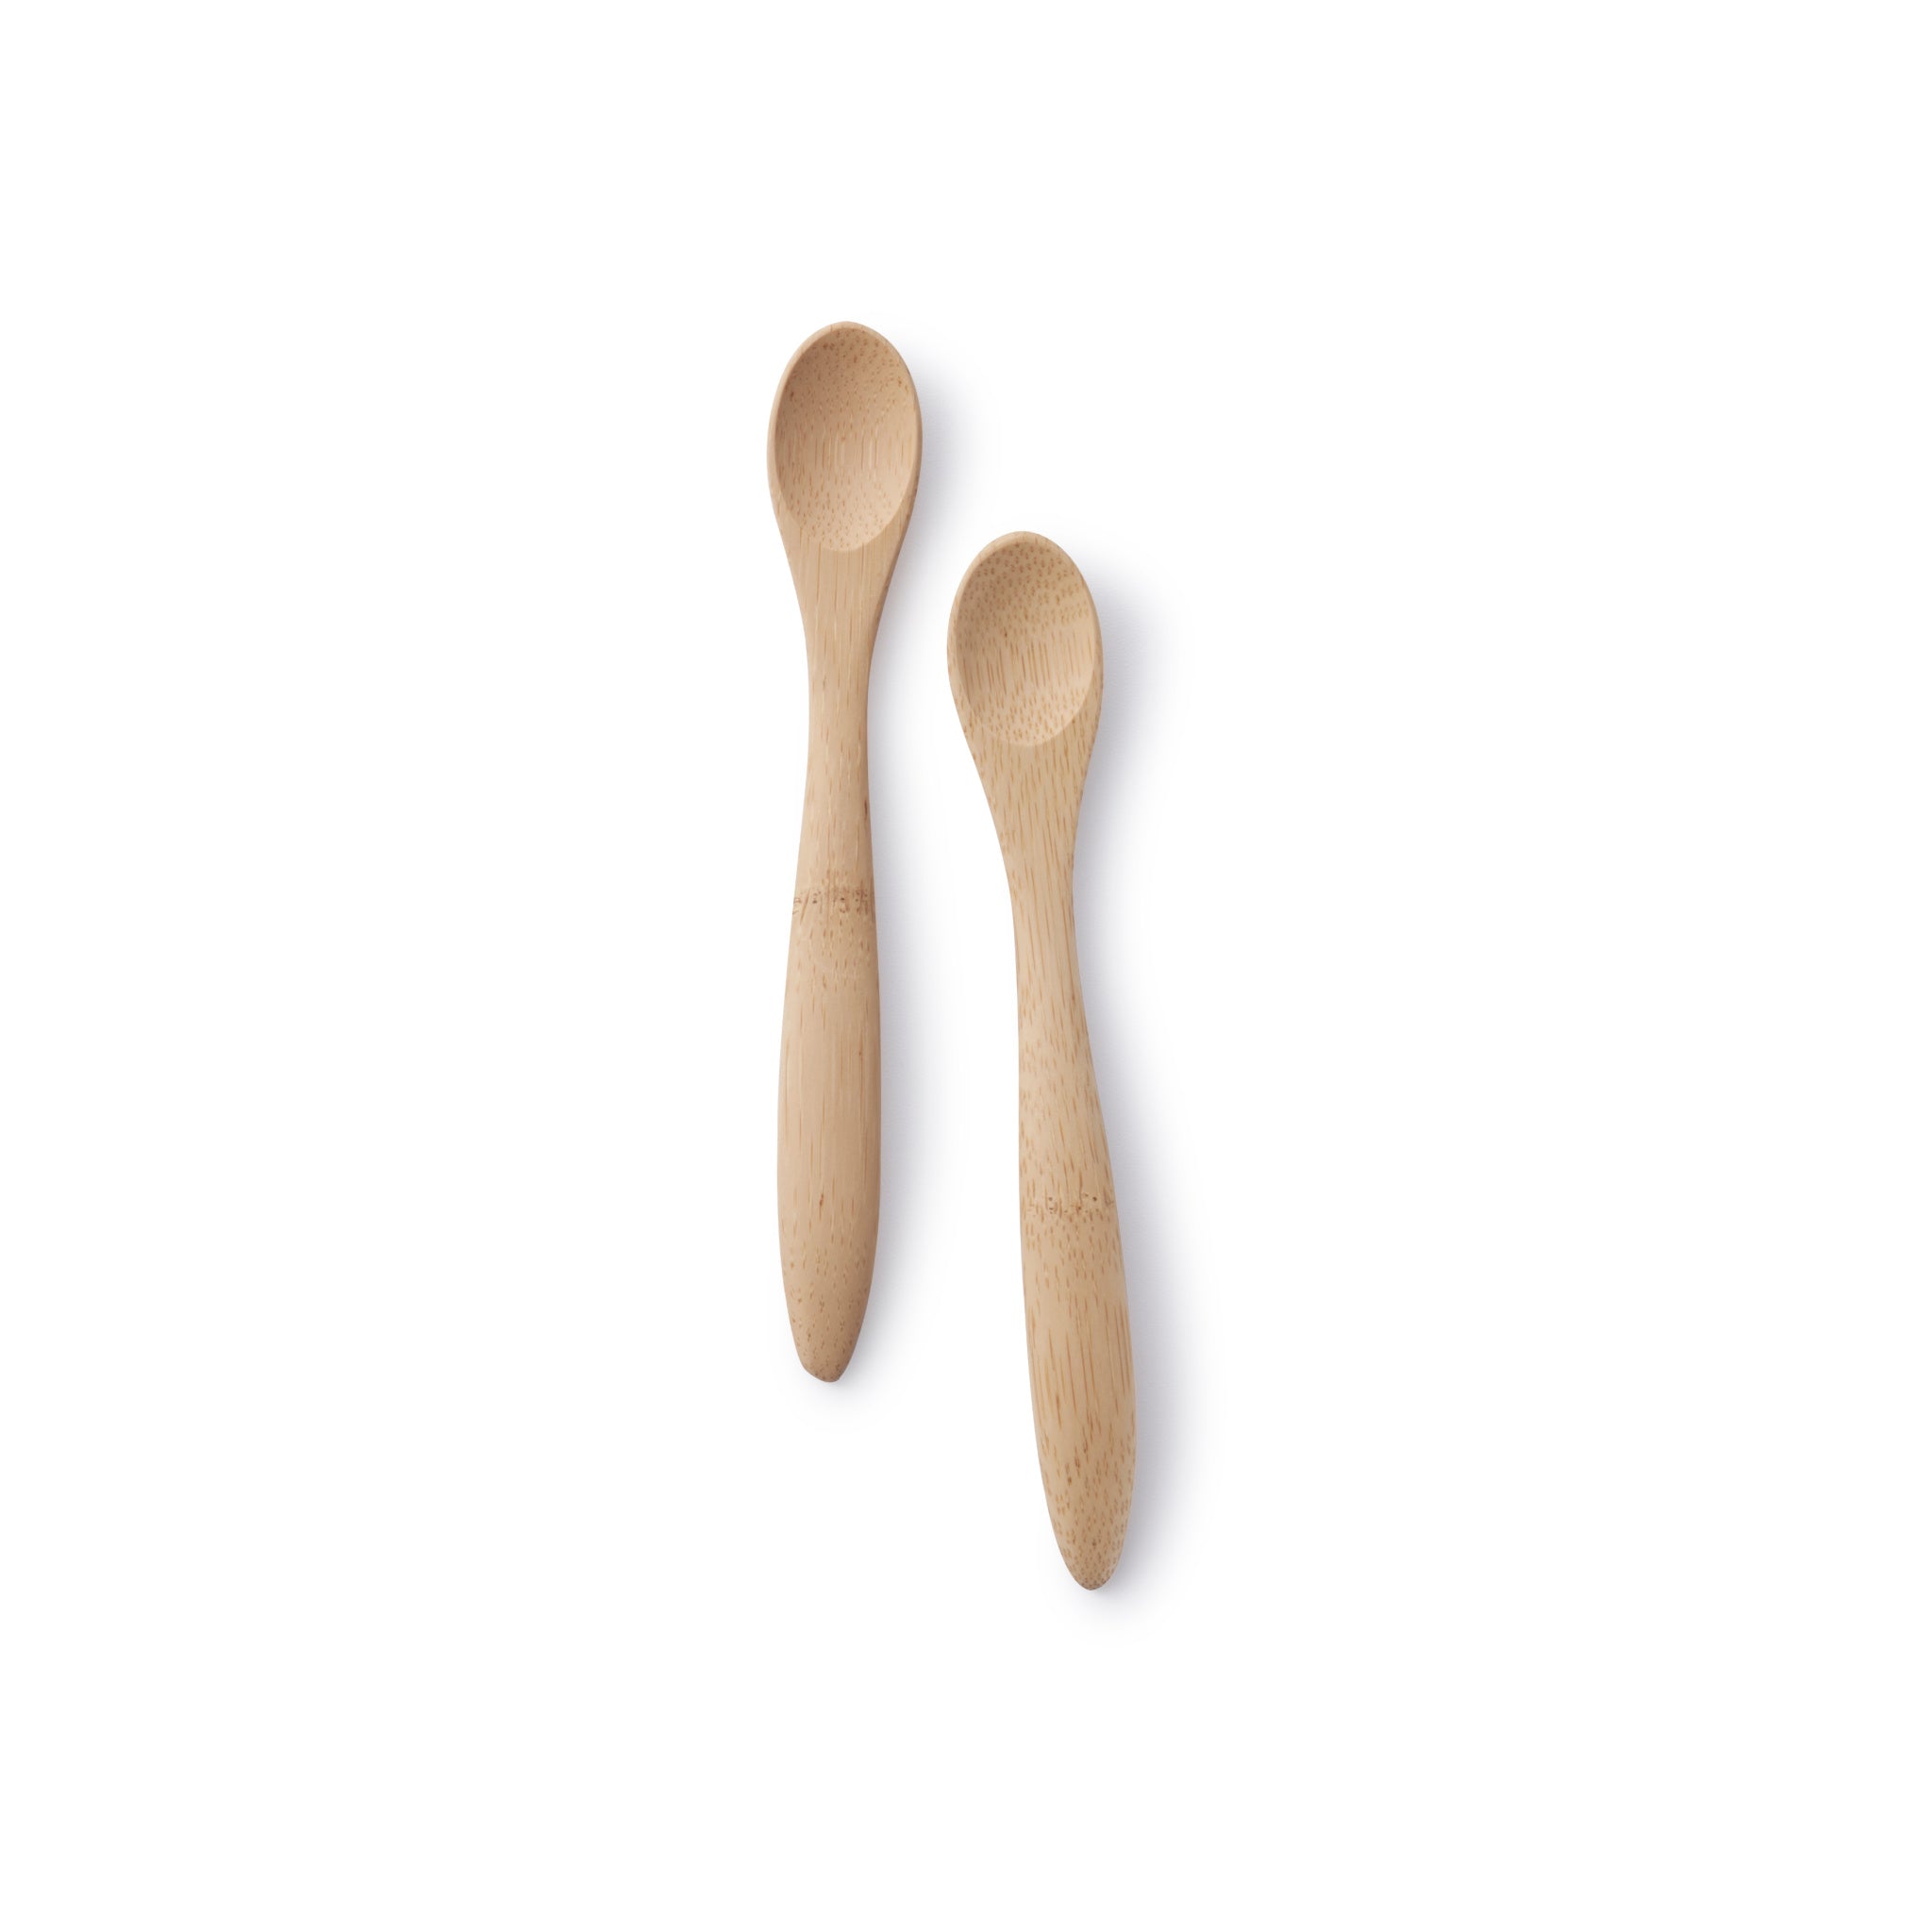 Bambu Baby Feeding Spoons - 2 ct